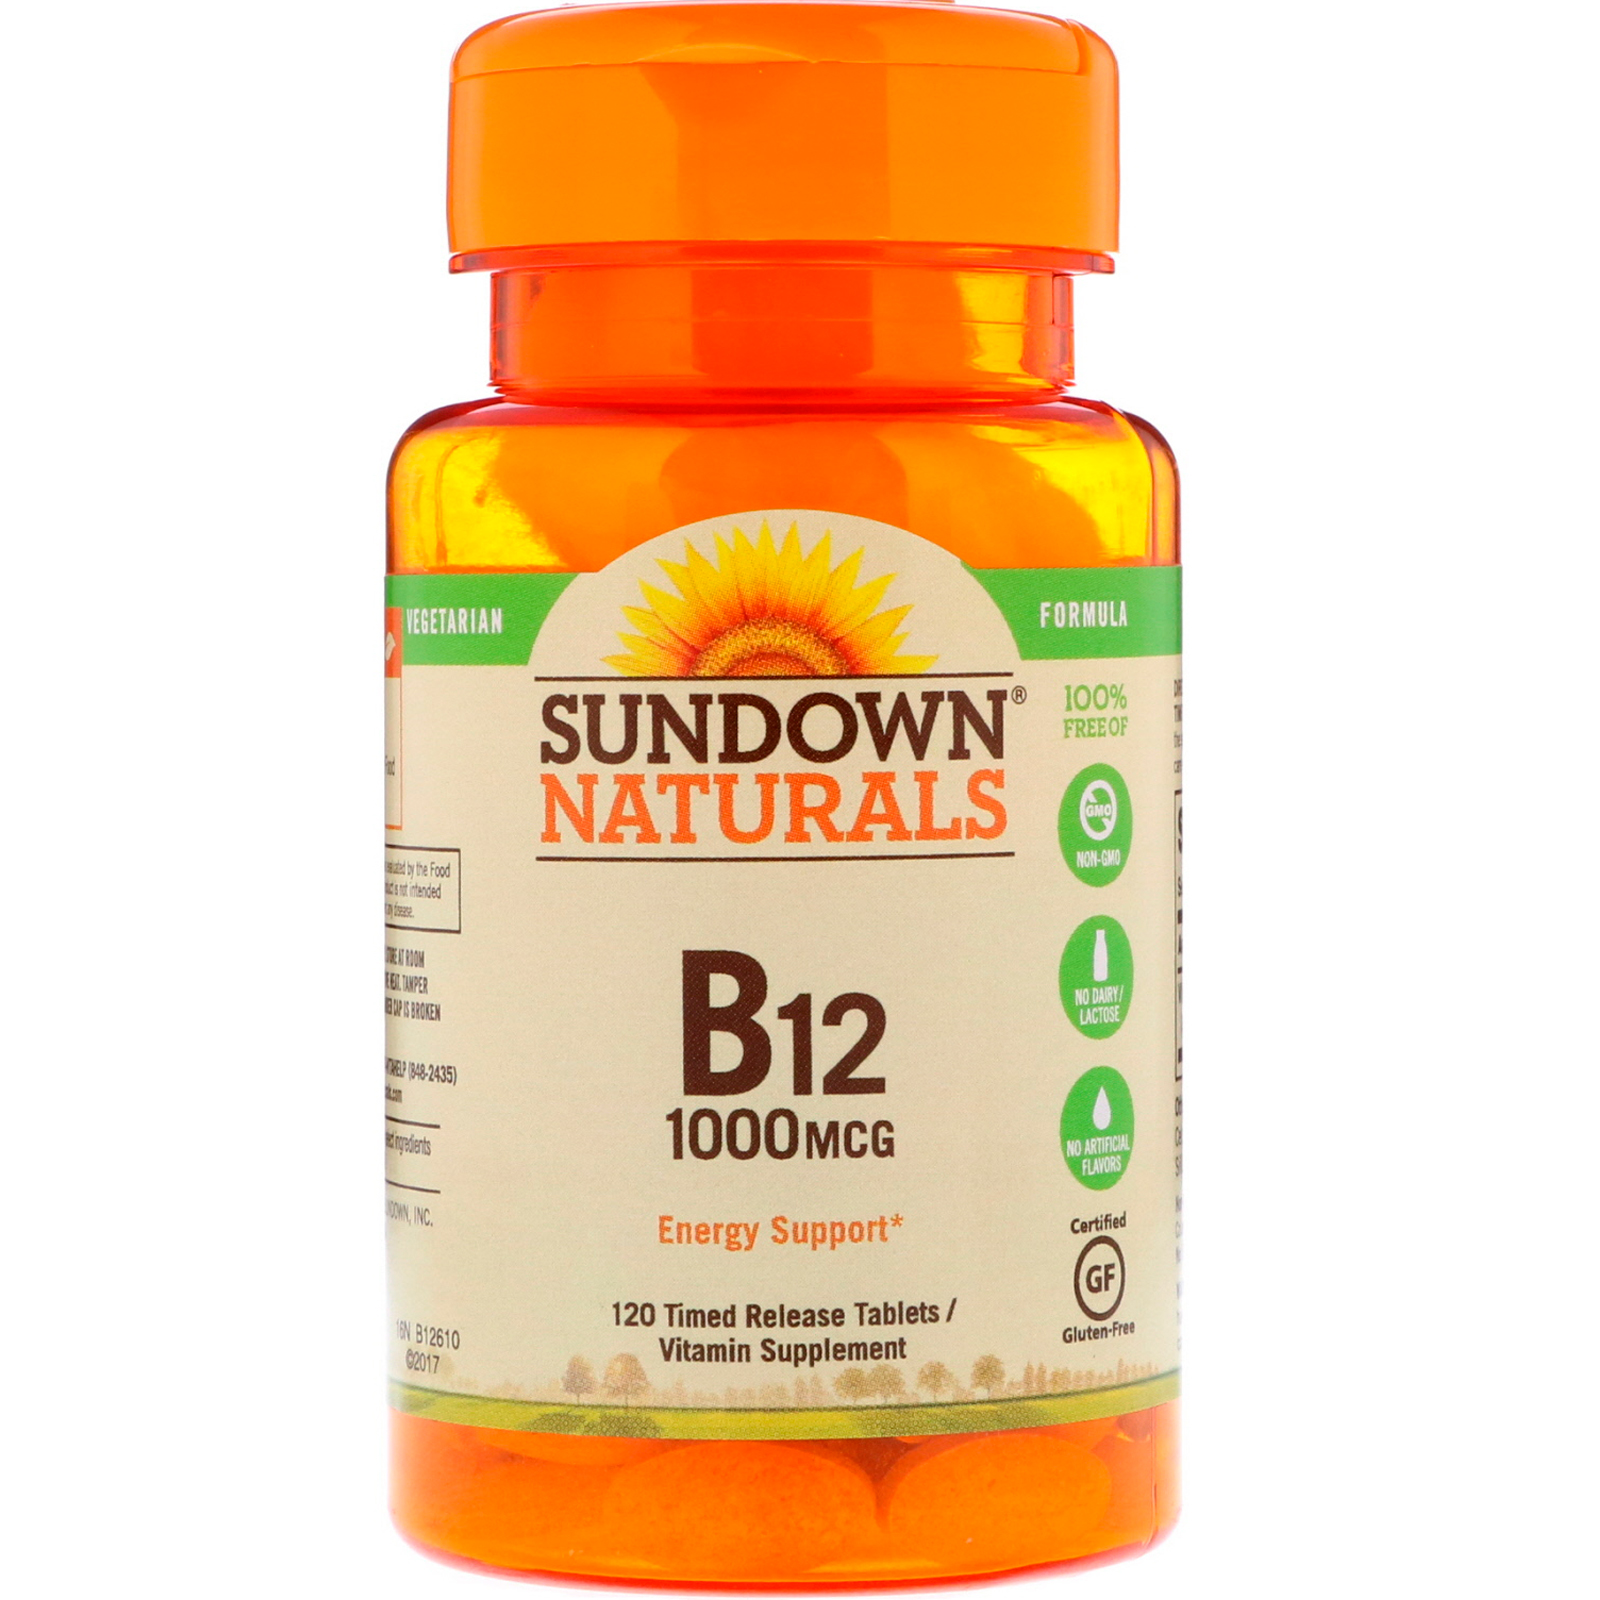 Sundown Naturals Vitamin B12 1000 Mcg 120 Timed Release Tablets